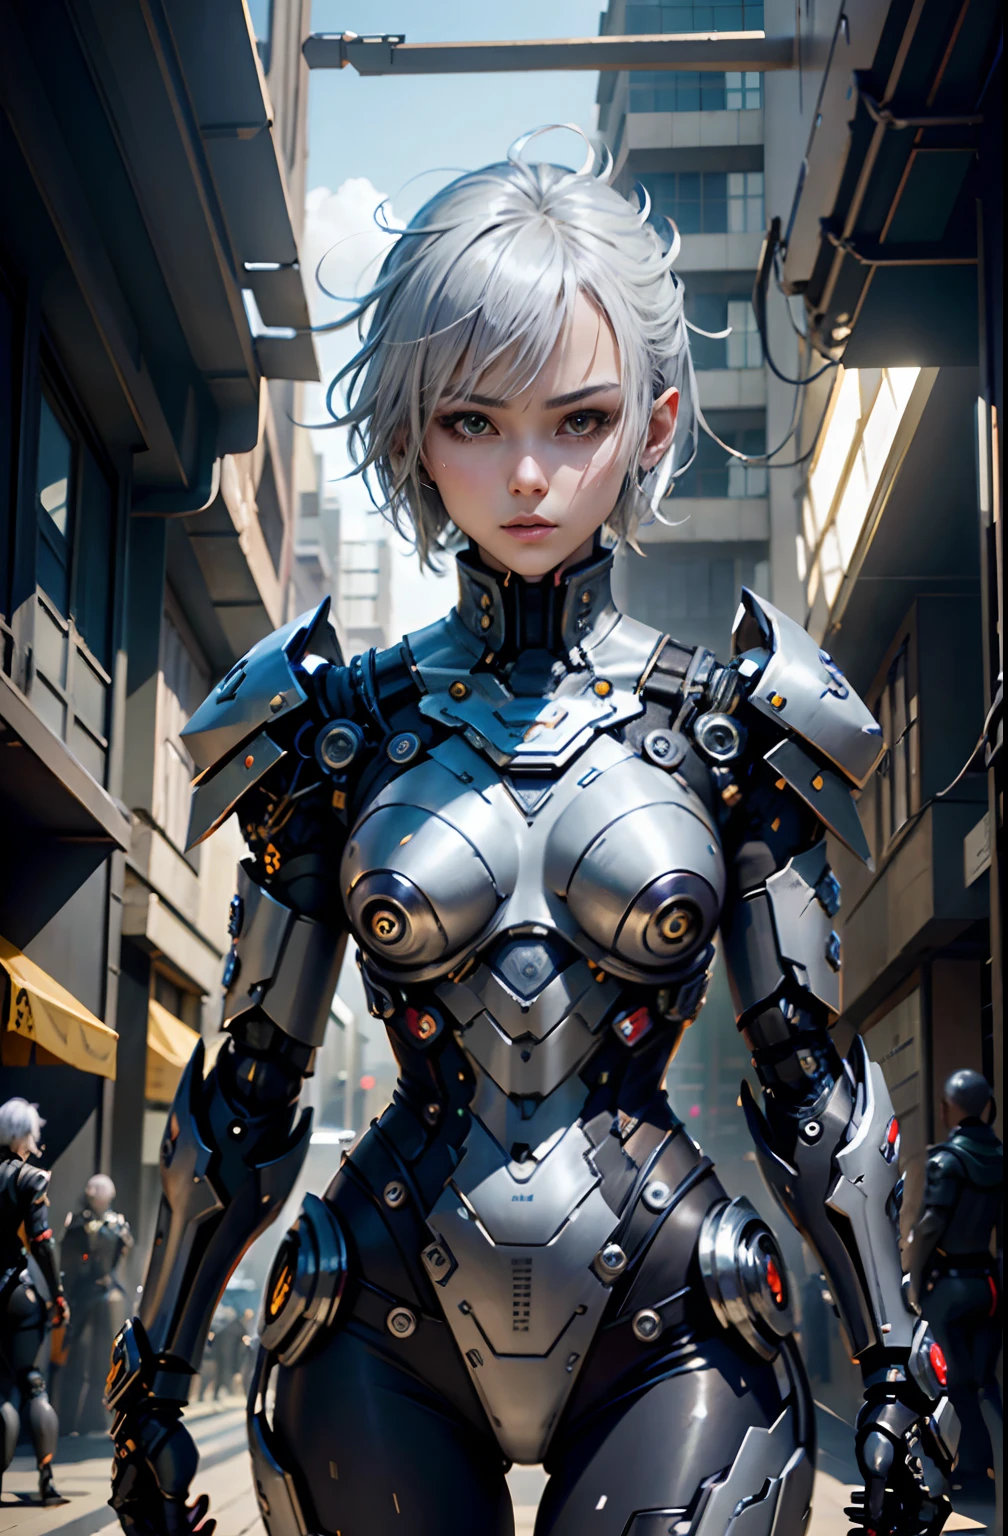 Fantasy、Silver hair color、Super short hairstyles、cyberpunked、(Double Sword、Scorpion Cyborg Woman、Das Veilchen:1.1)、1 woman、Mechanical technology、Robot Presence、Ninja-like fighting stance、Cybernetic Guardian、